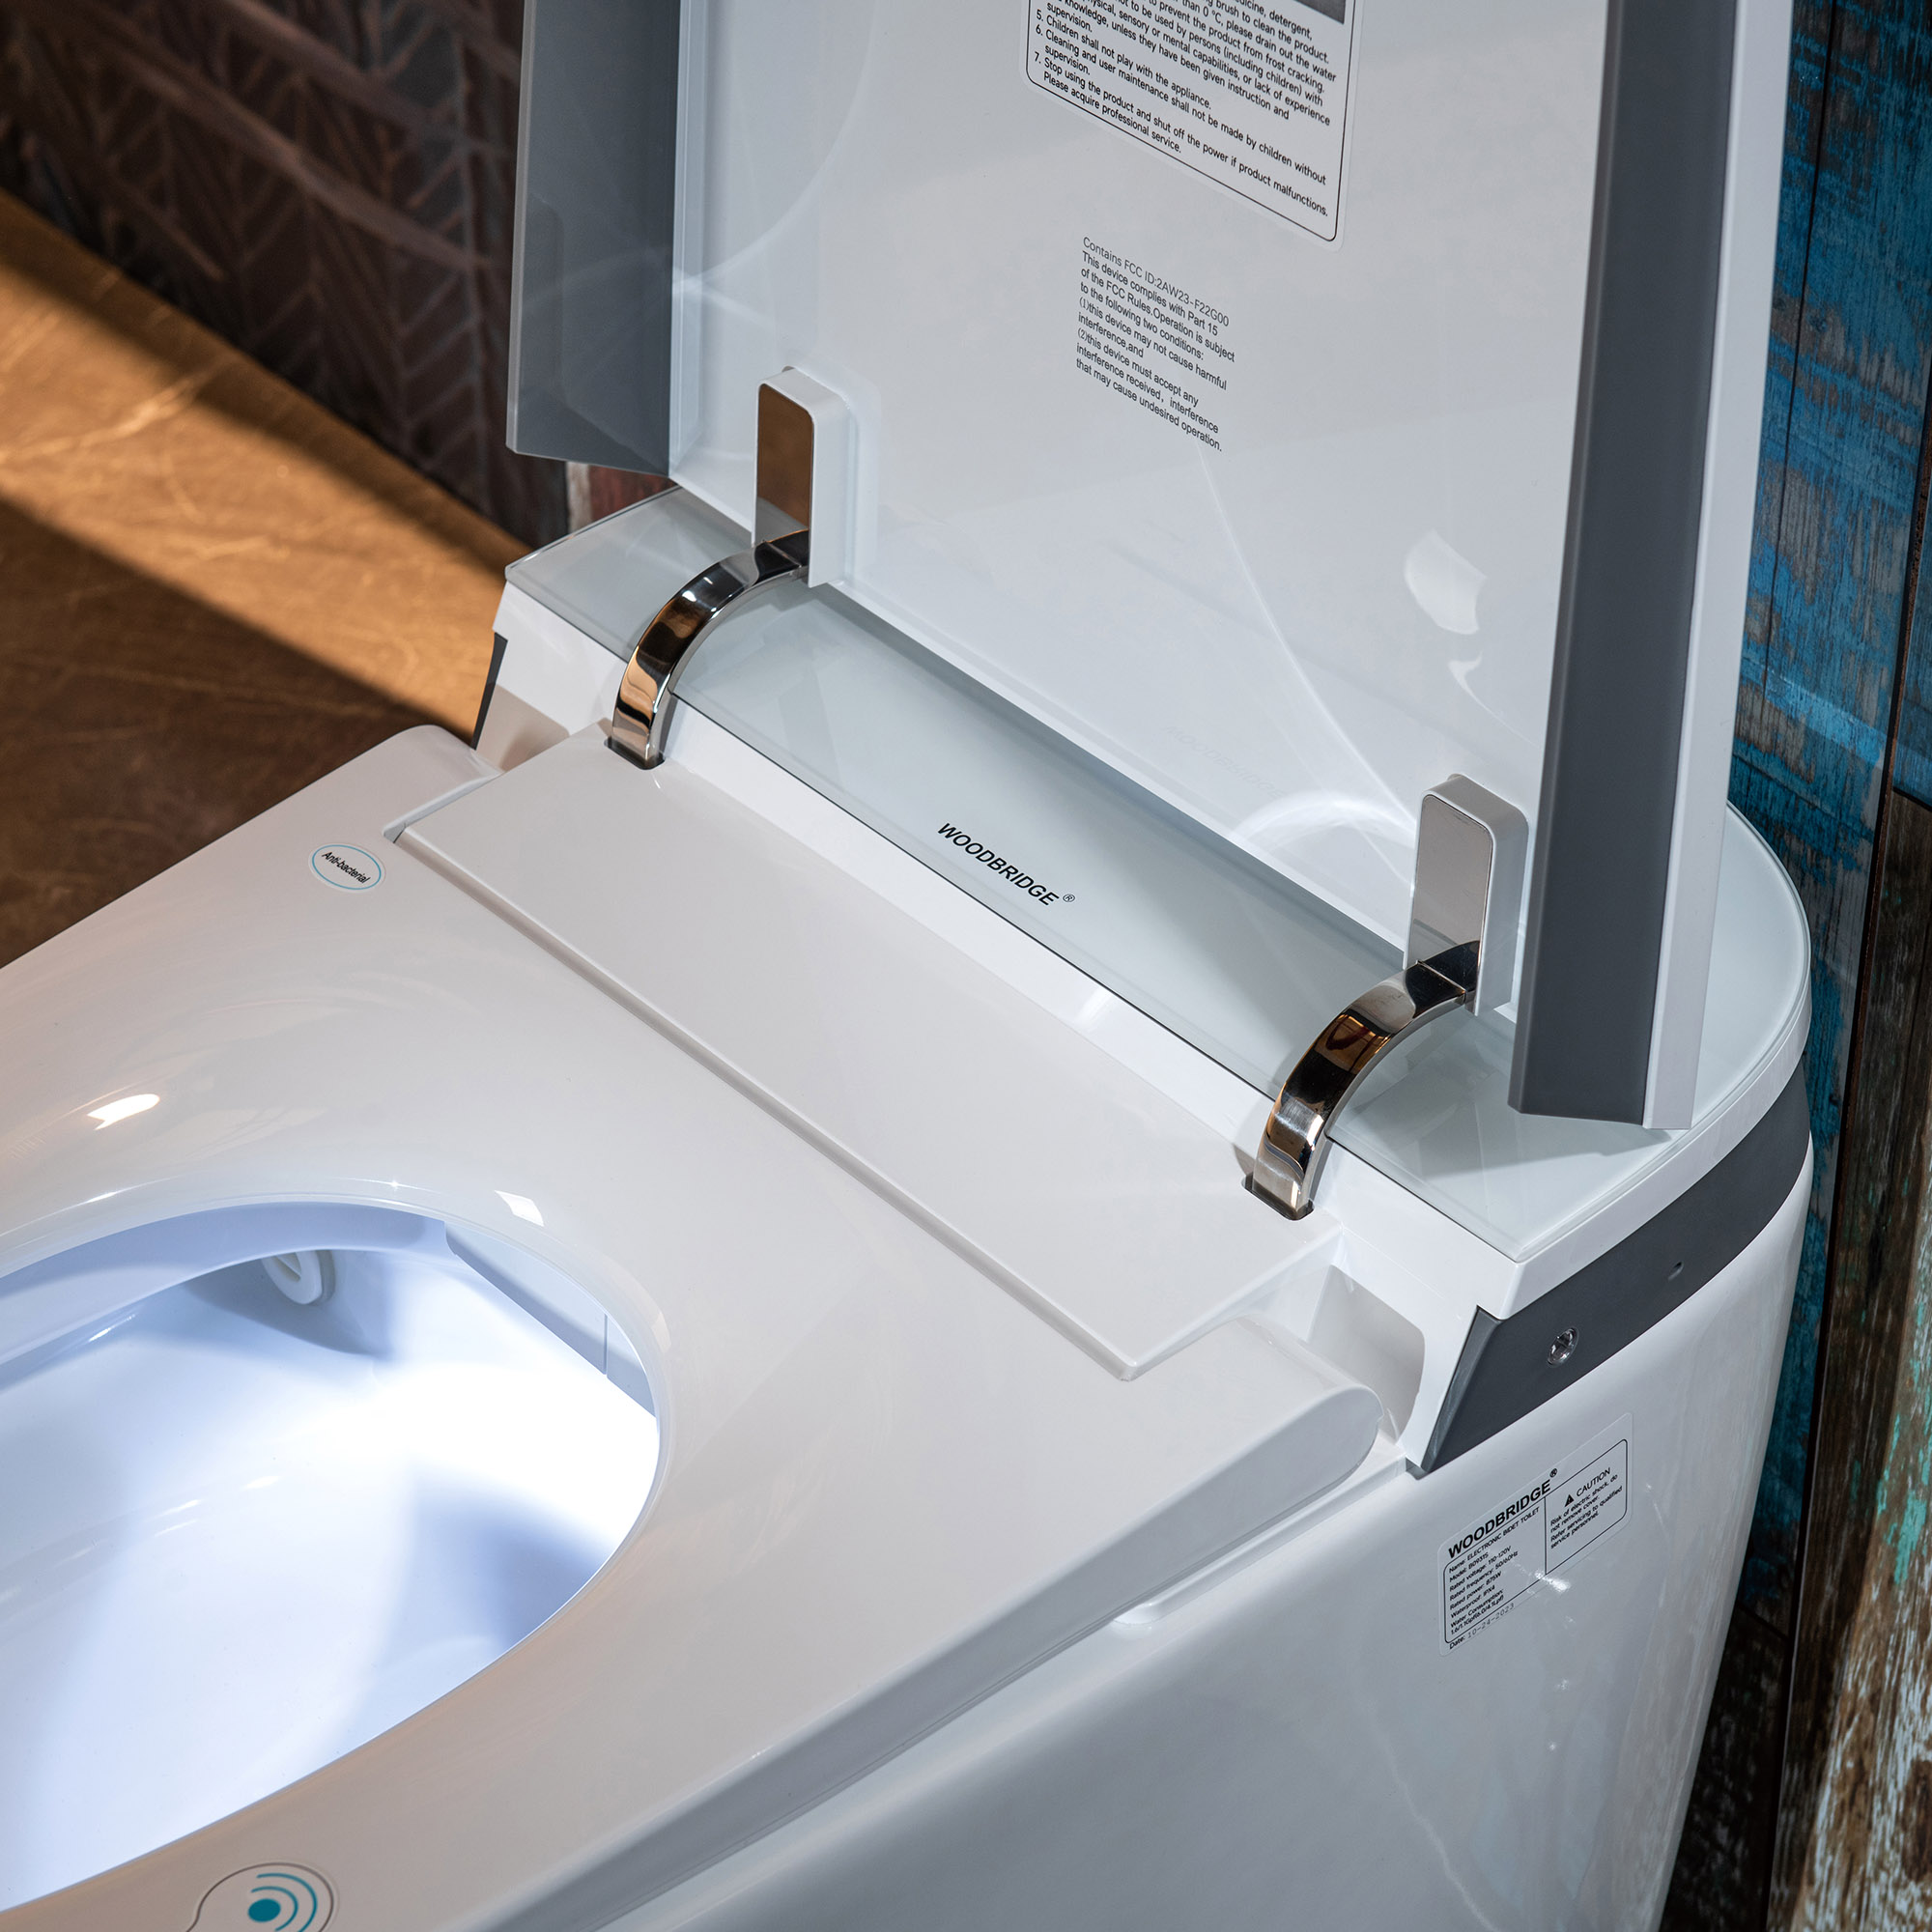  WOODBRIDGE B0931S Smart Bidet Toilet with 1.28 GPF Dual Flush Auto Open & Close, Foot Sensor Flush, Voice Control,1000 Gram Map Flushing Score, LED Display, Chair Height Design and Cleaning Foam Dispenser_13938